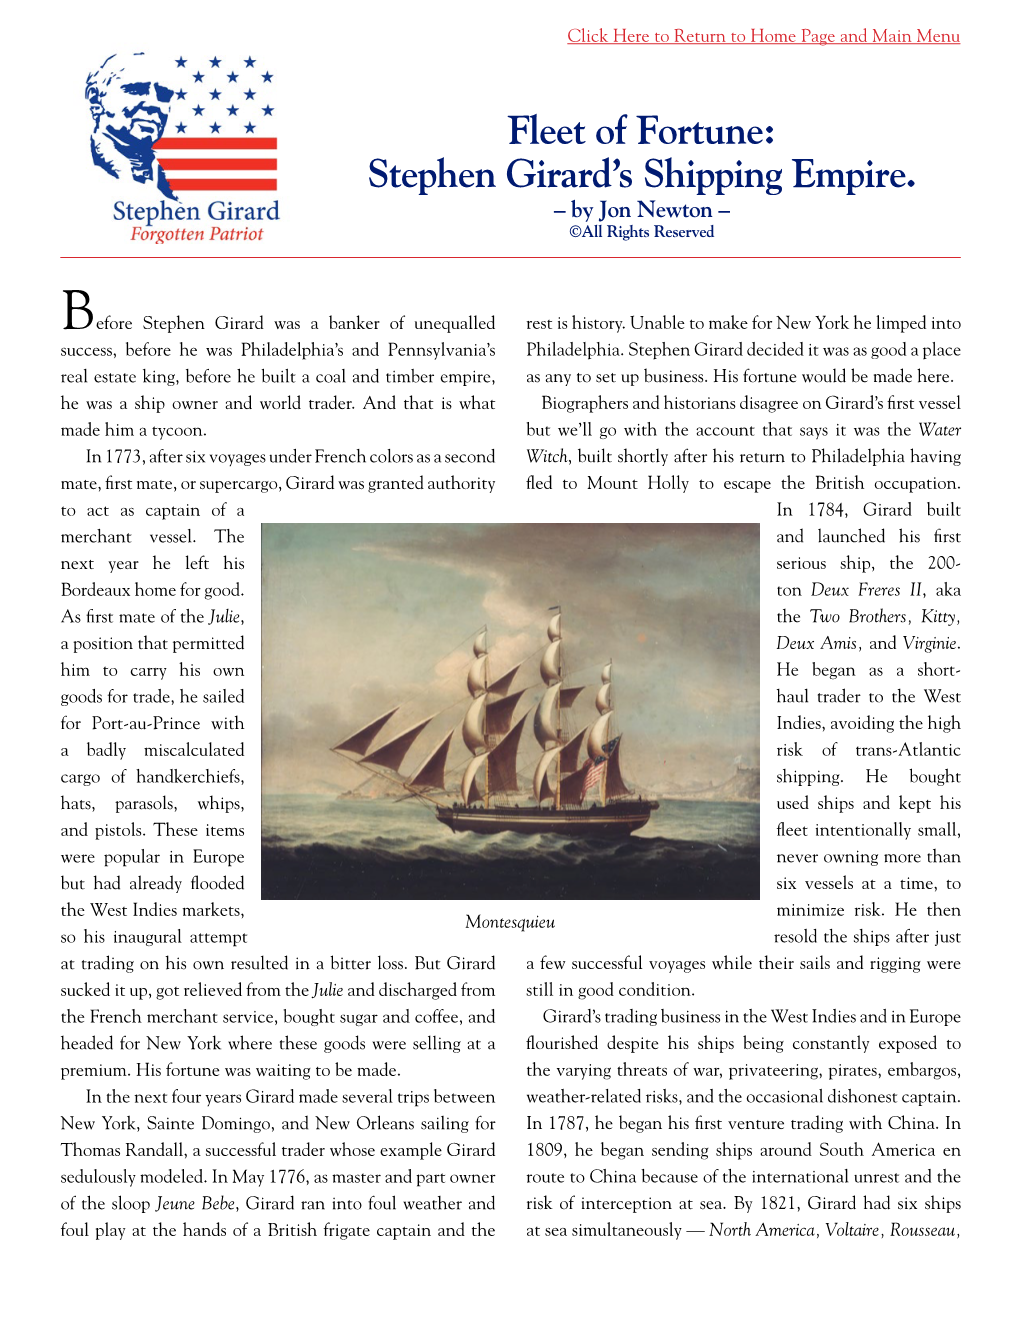 Fleet of Fortune: Stephen Girard's Shipping Empire